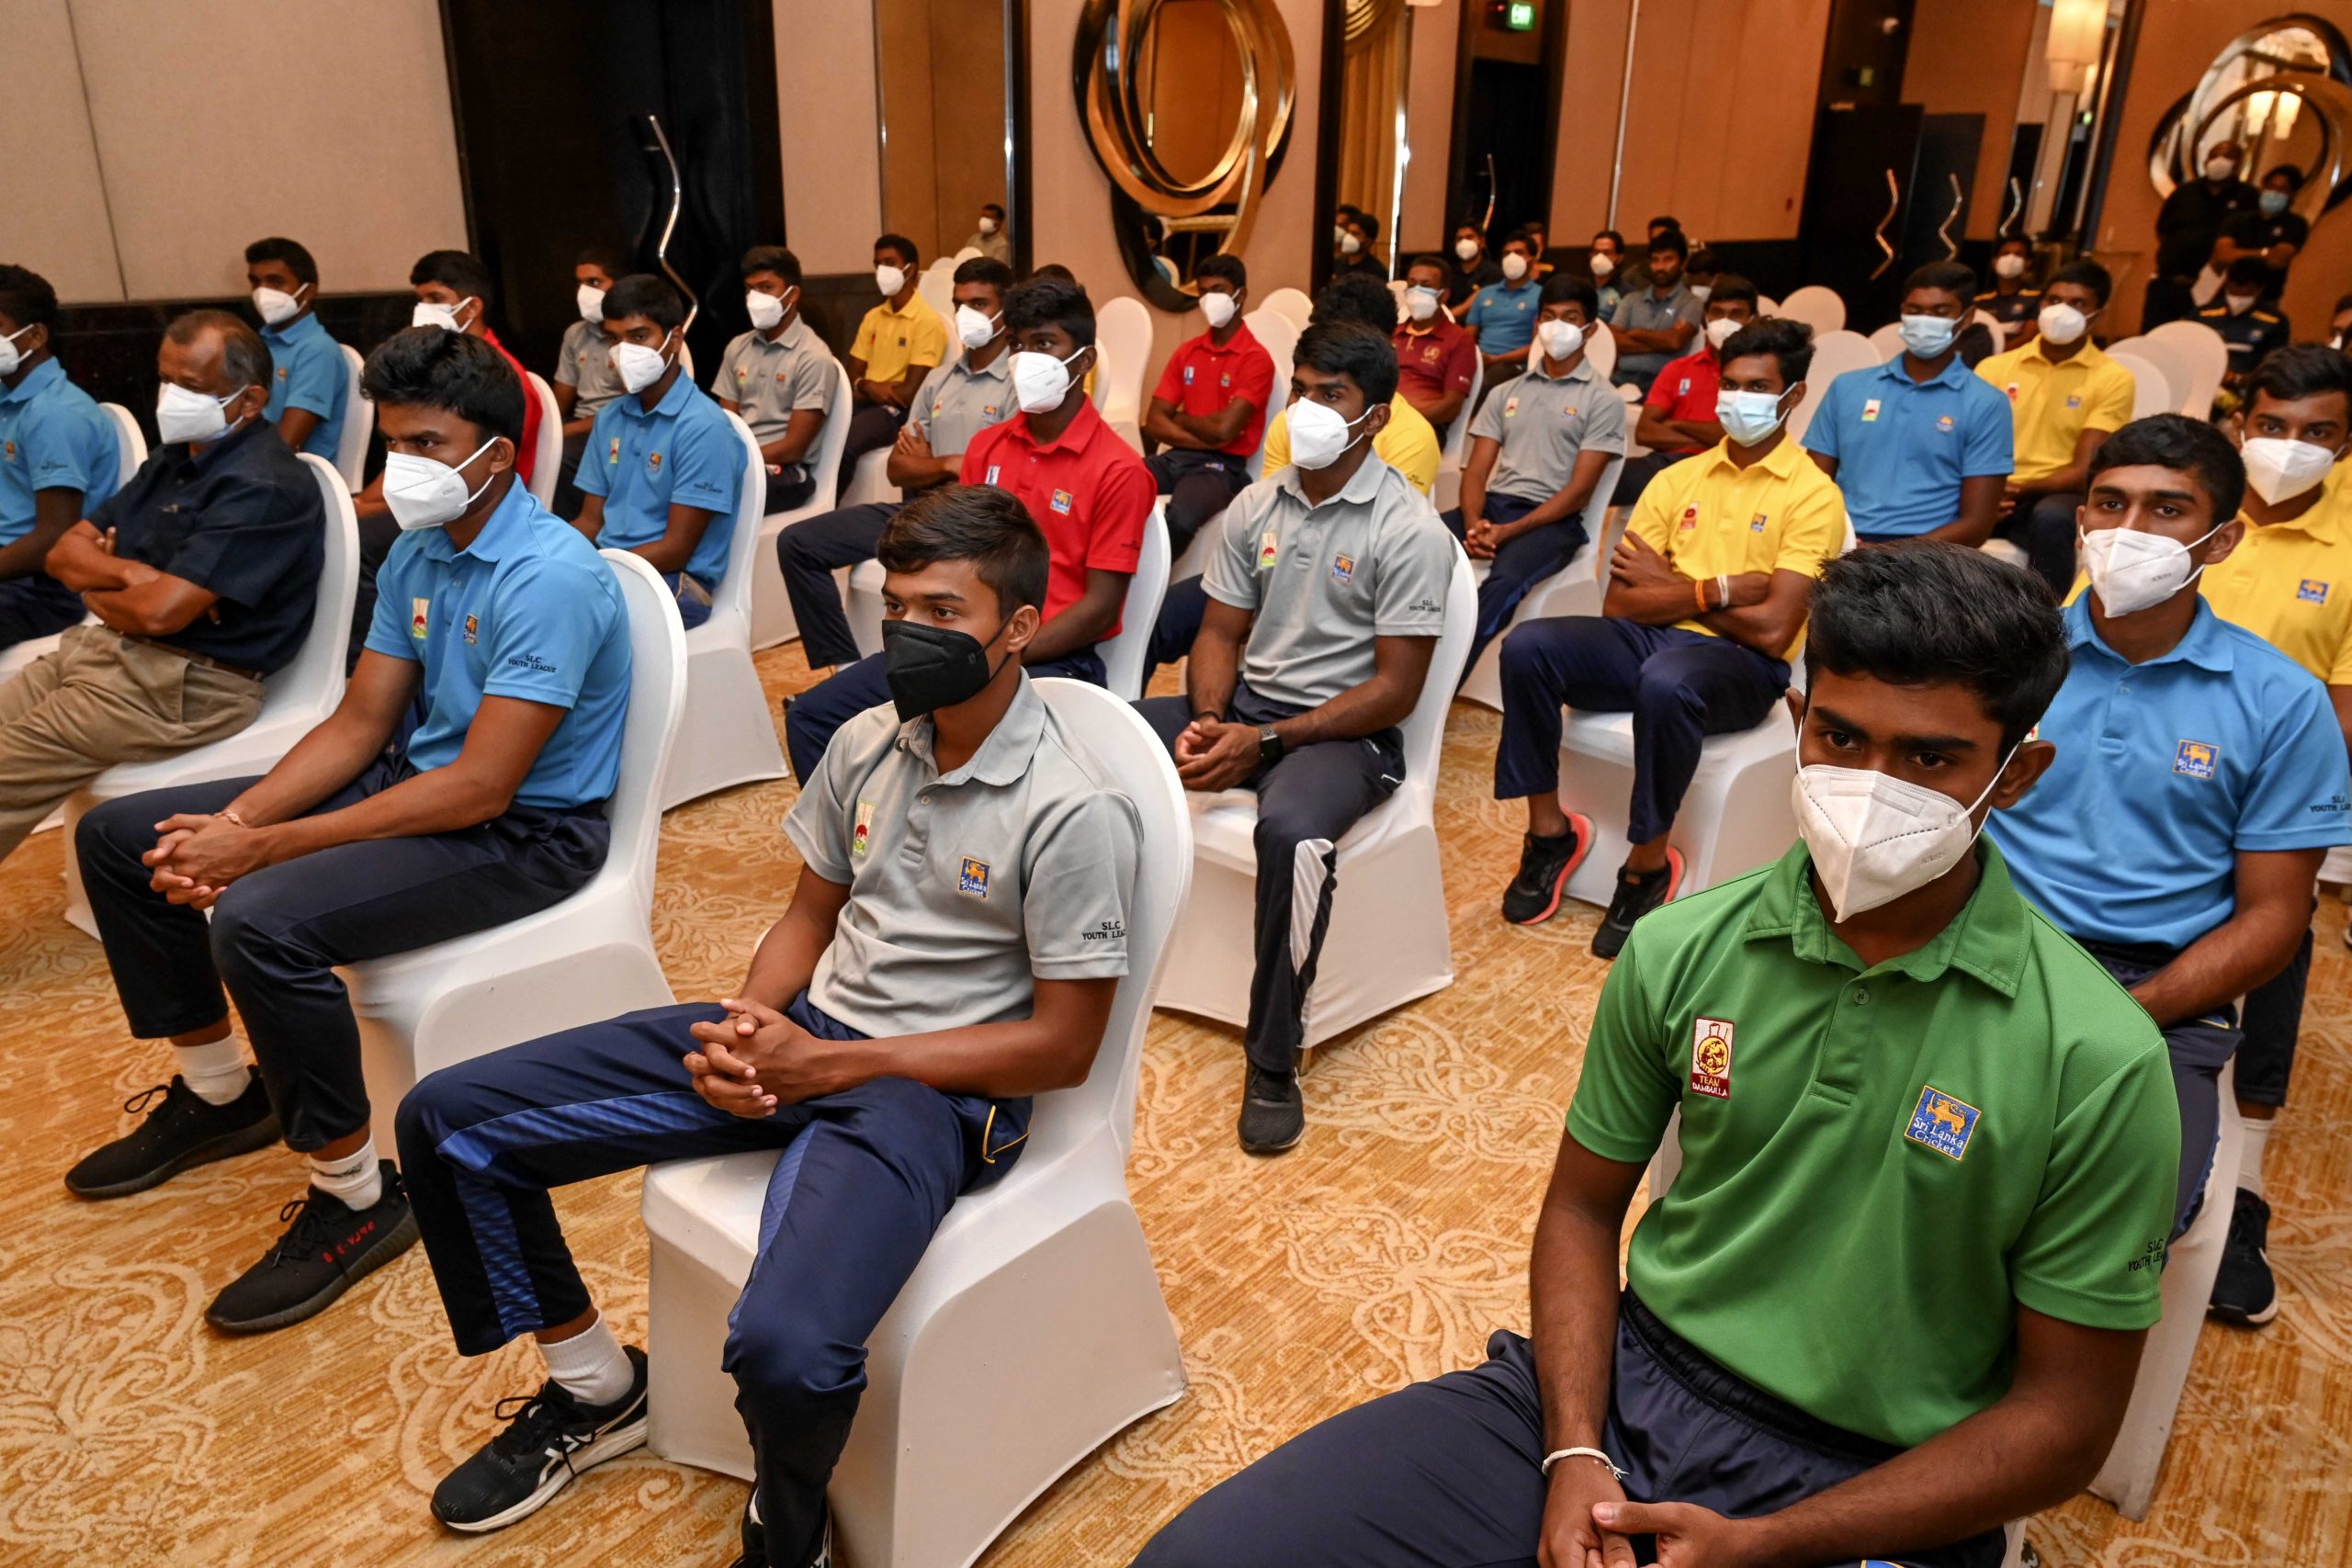 U19 players recognized by Sri Lanka Cricket